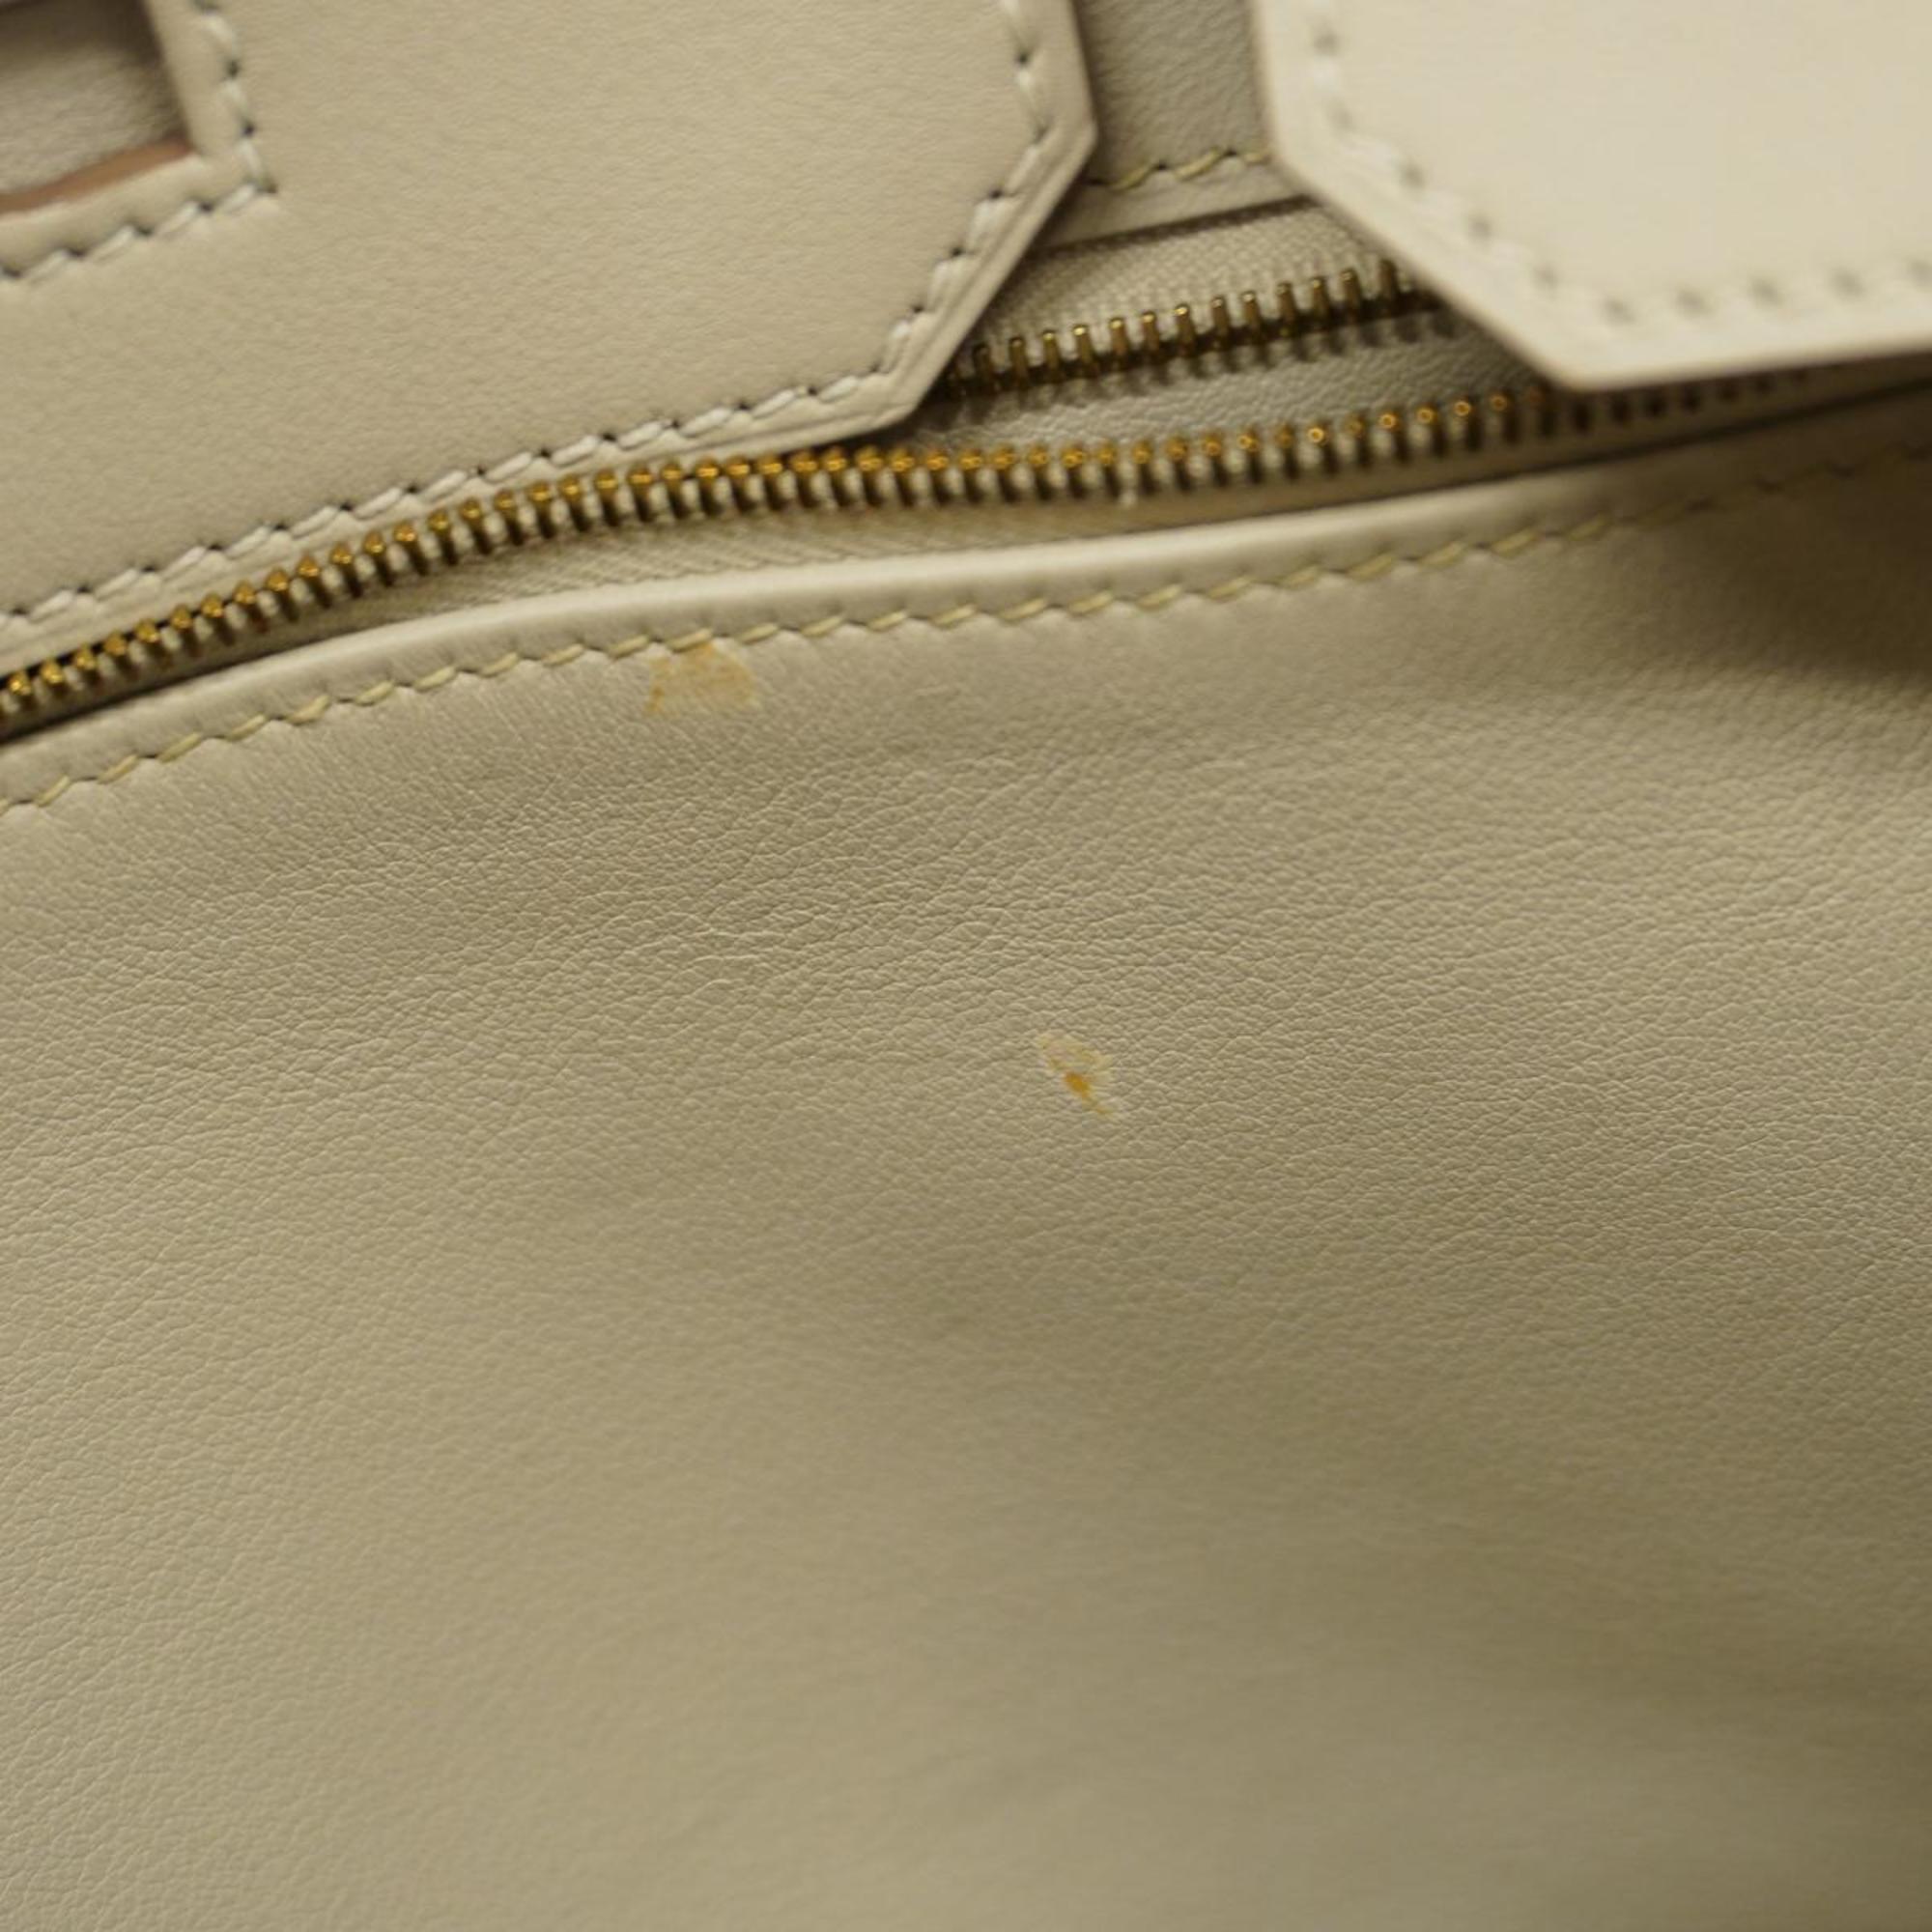 Hermes handbag Birkin 30 X engraved Swift pearl grey for women